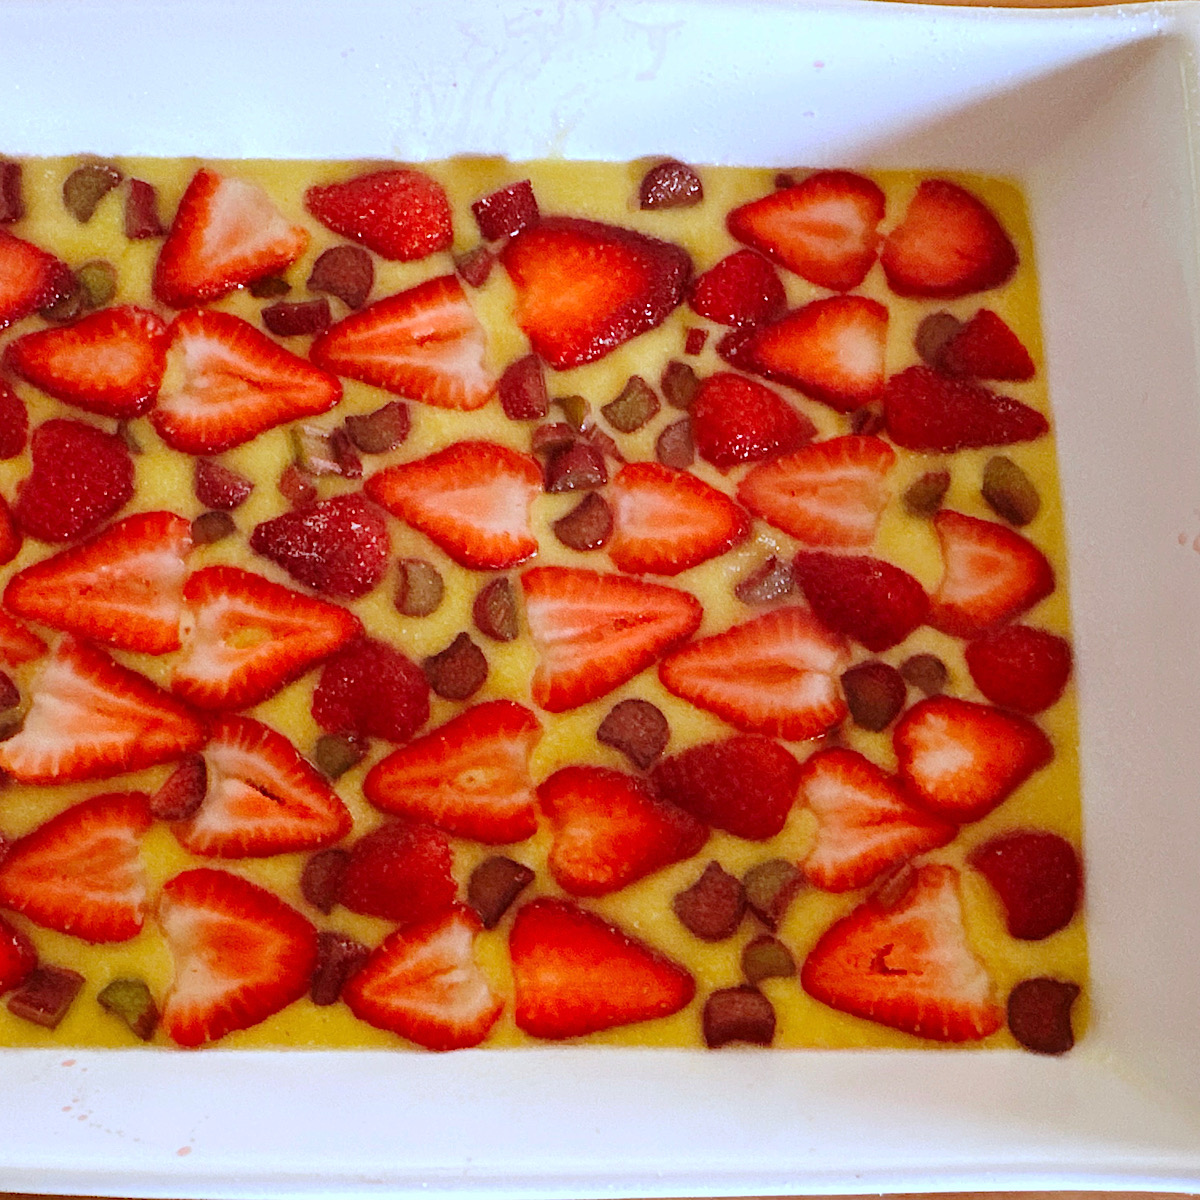 Strawberry rhubarb sheet cake before baking.